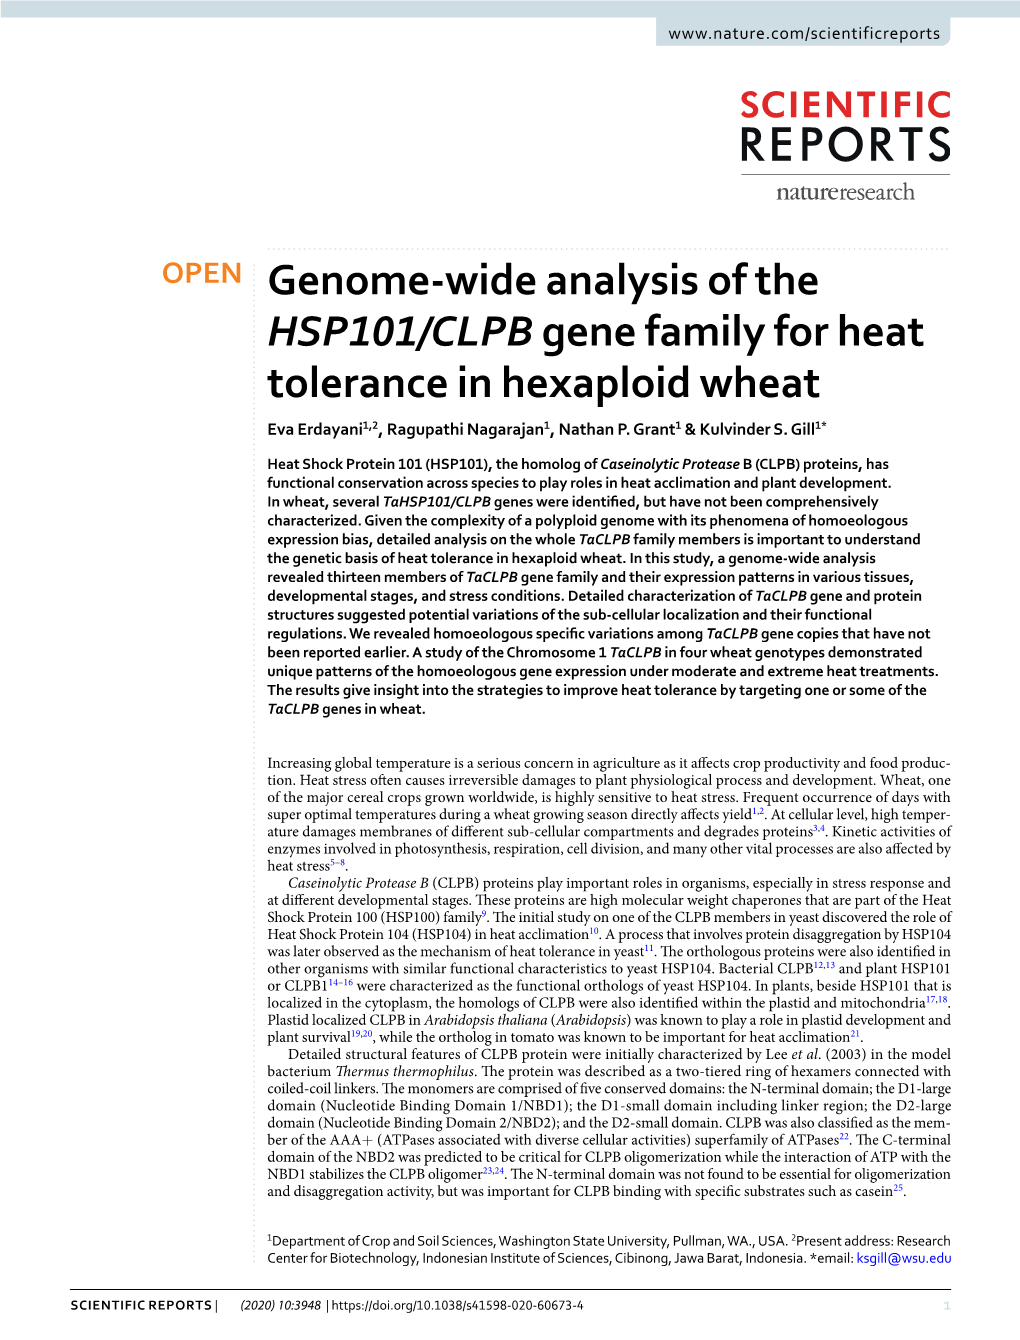 Genome-Wide Analysis of the HSP101/CLPB Gene Family for Heat Tolerance in Hexaploid Wheat Eva Erdayani1,2, Ragupathi Nagarajan1, Nathan P